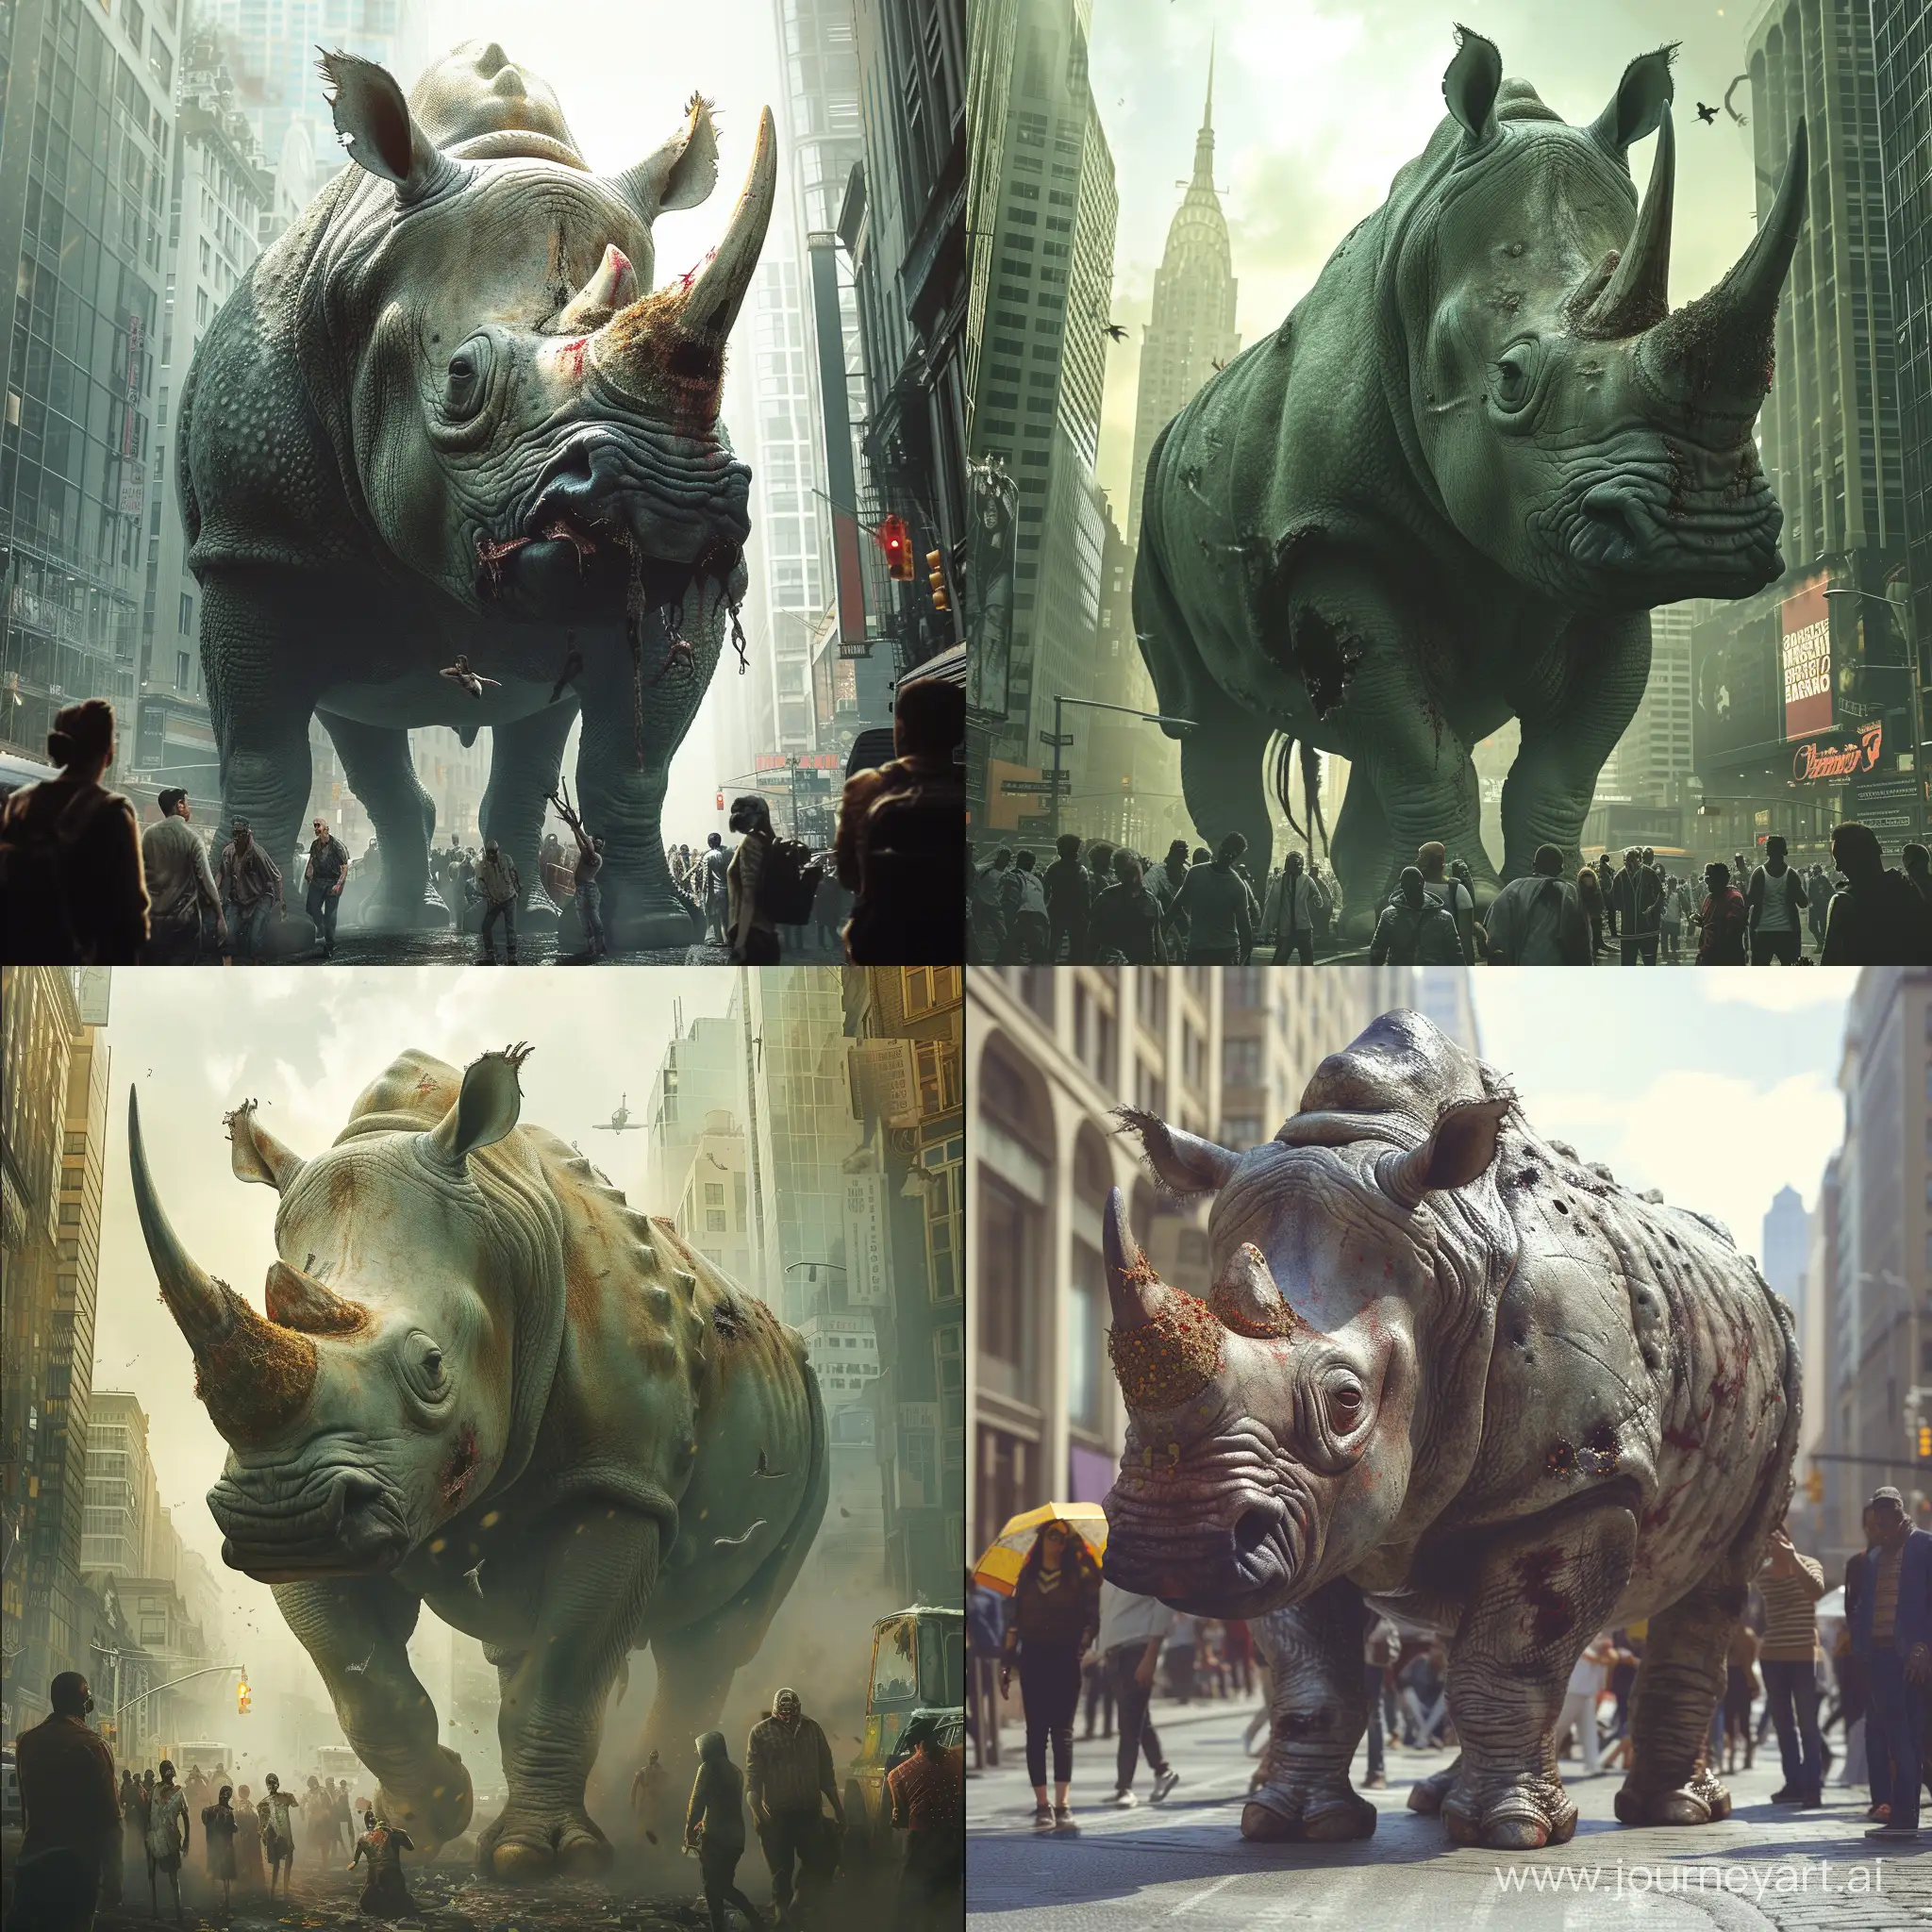 Urban-Encounter-Massive-Zombie-Rhinoceros-Roams-the-City